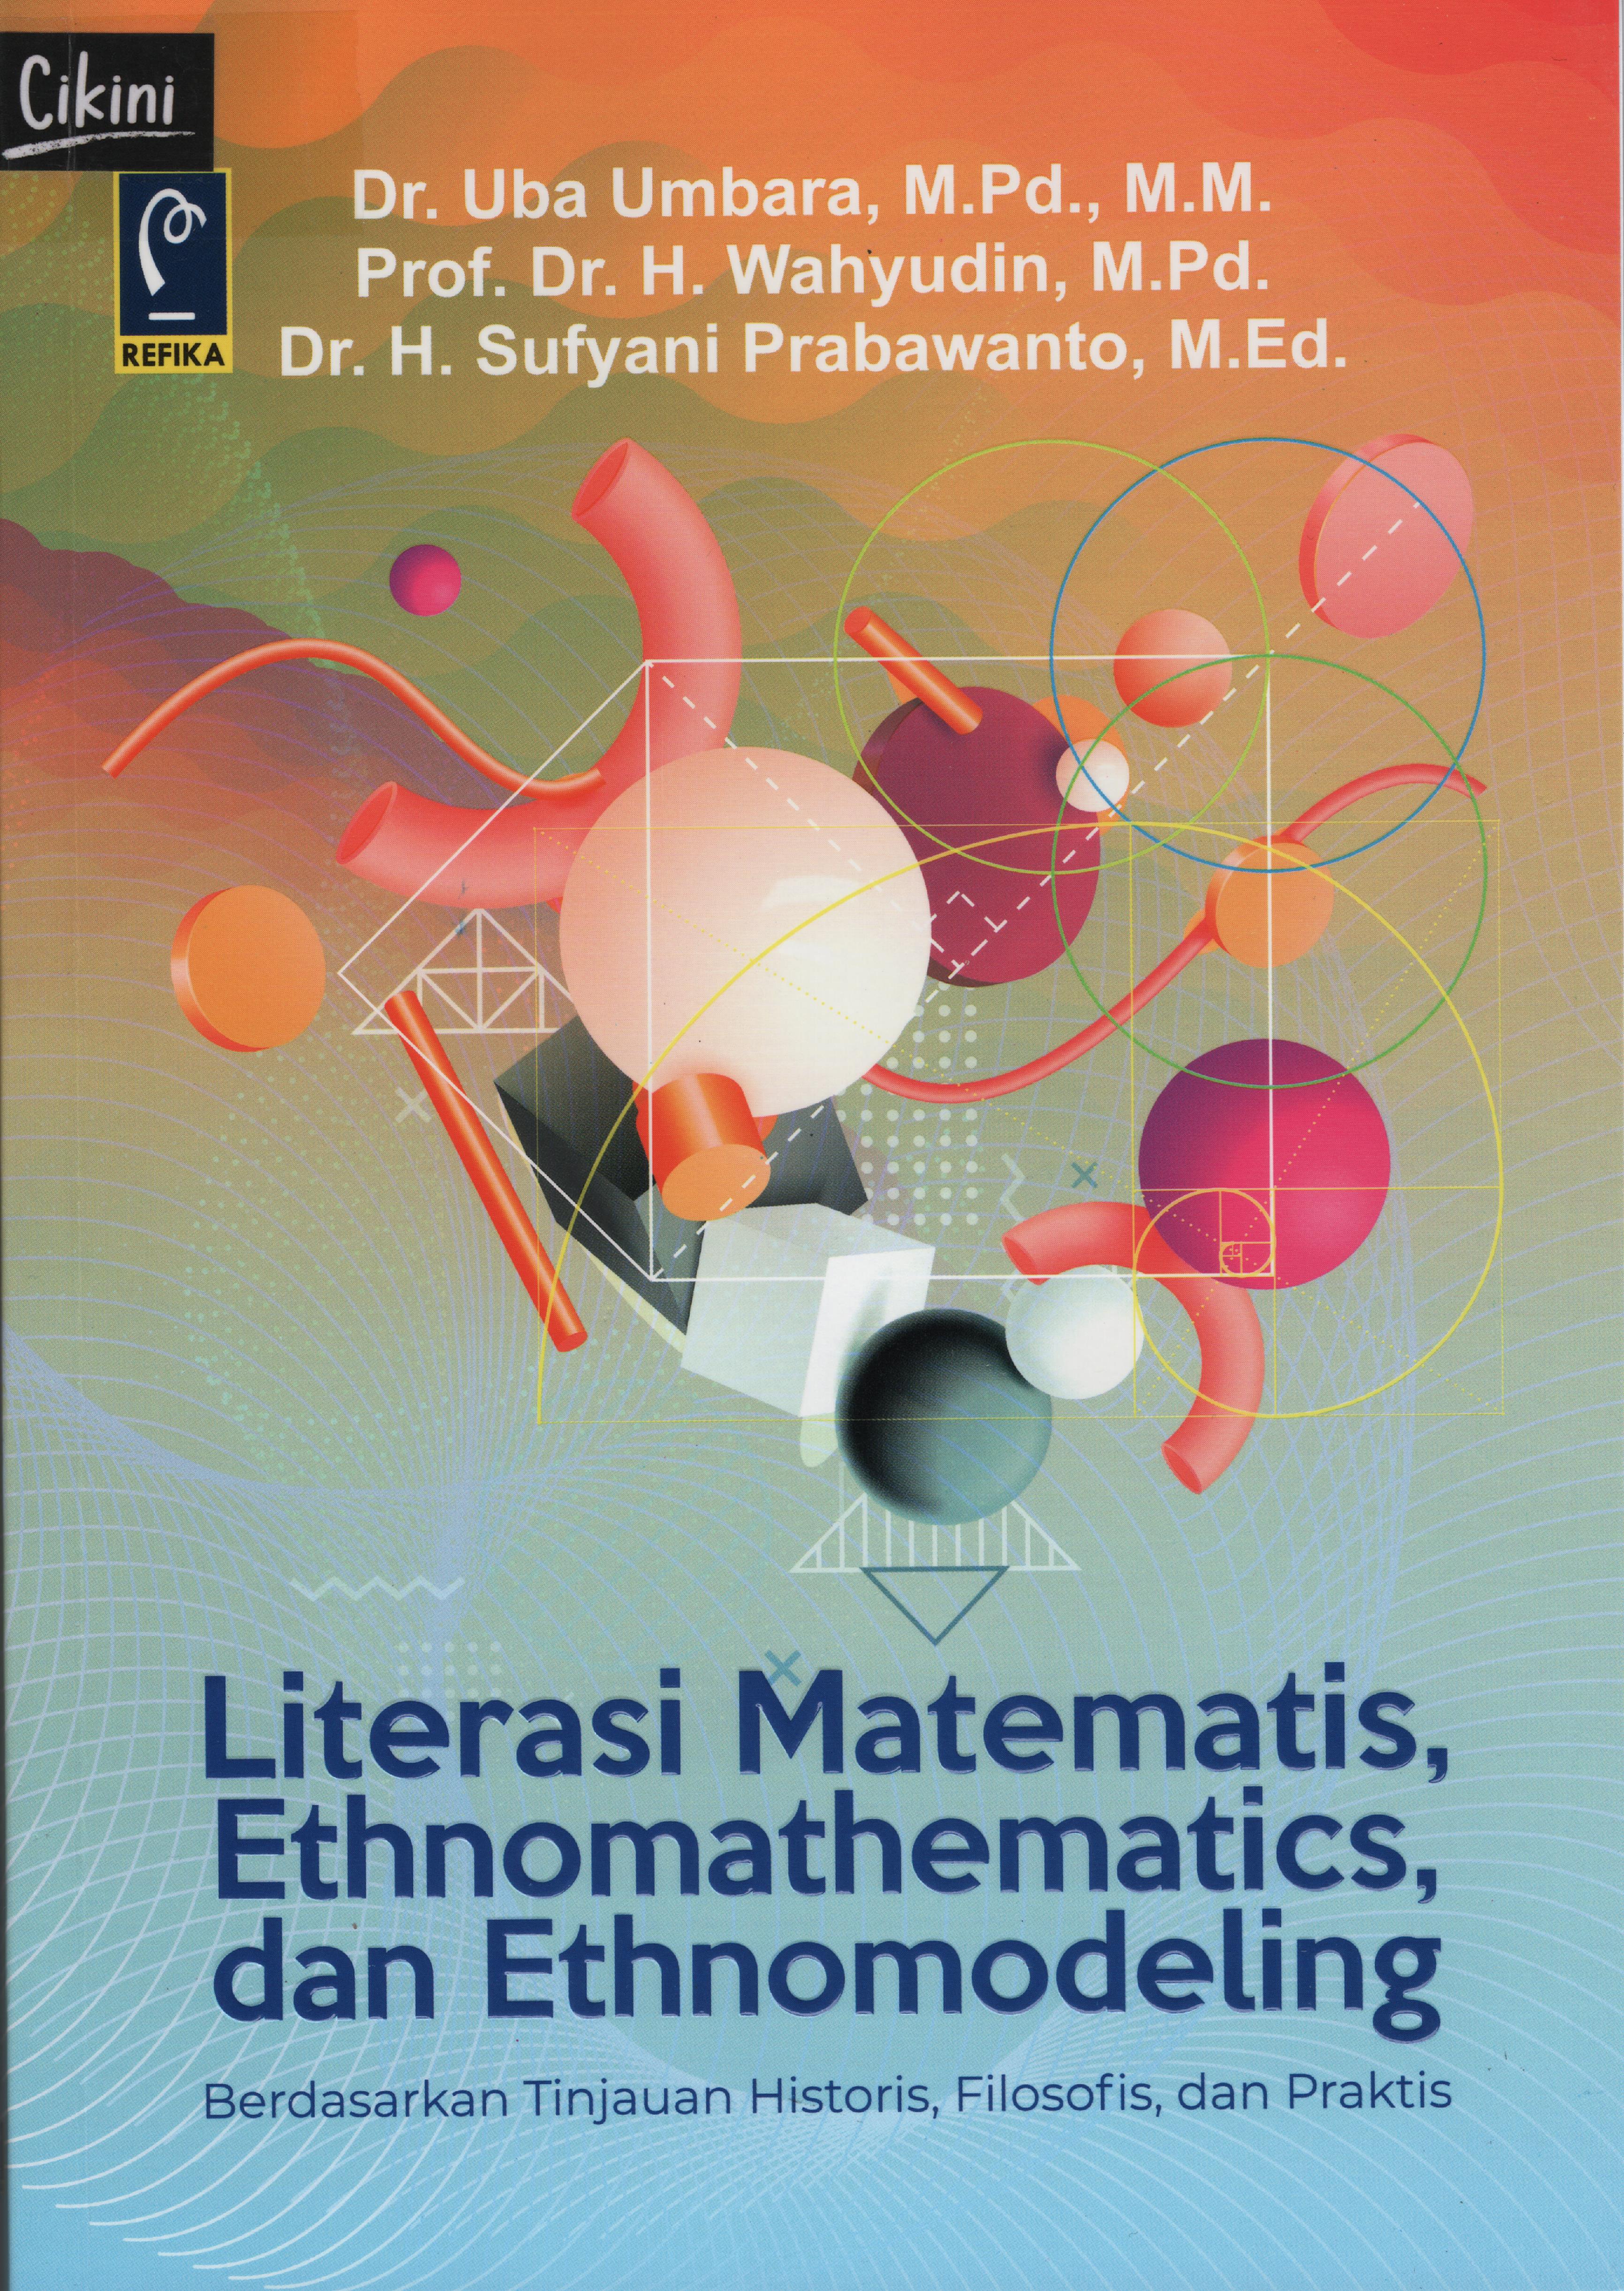 Literasi matematis, ethnomathematics, dan ethnomodeling : berdasarkan tinjauan historis, filosofis, dan praktis